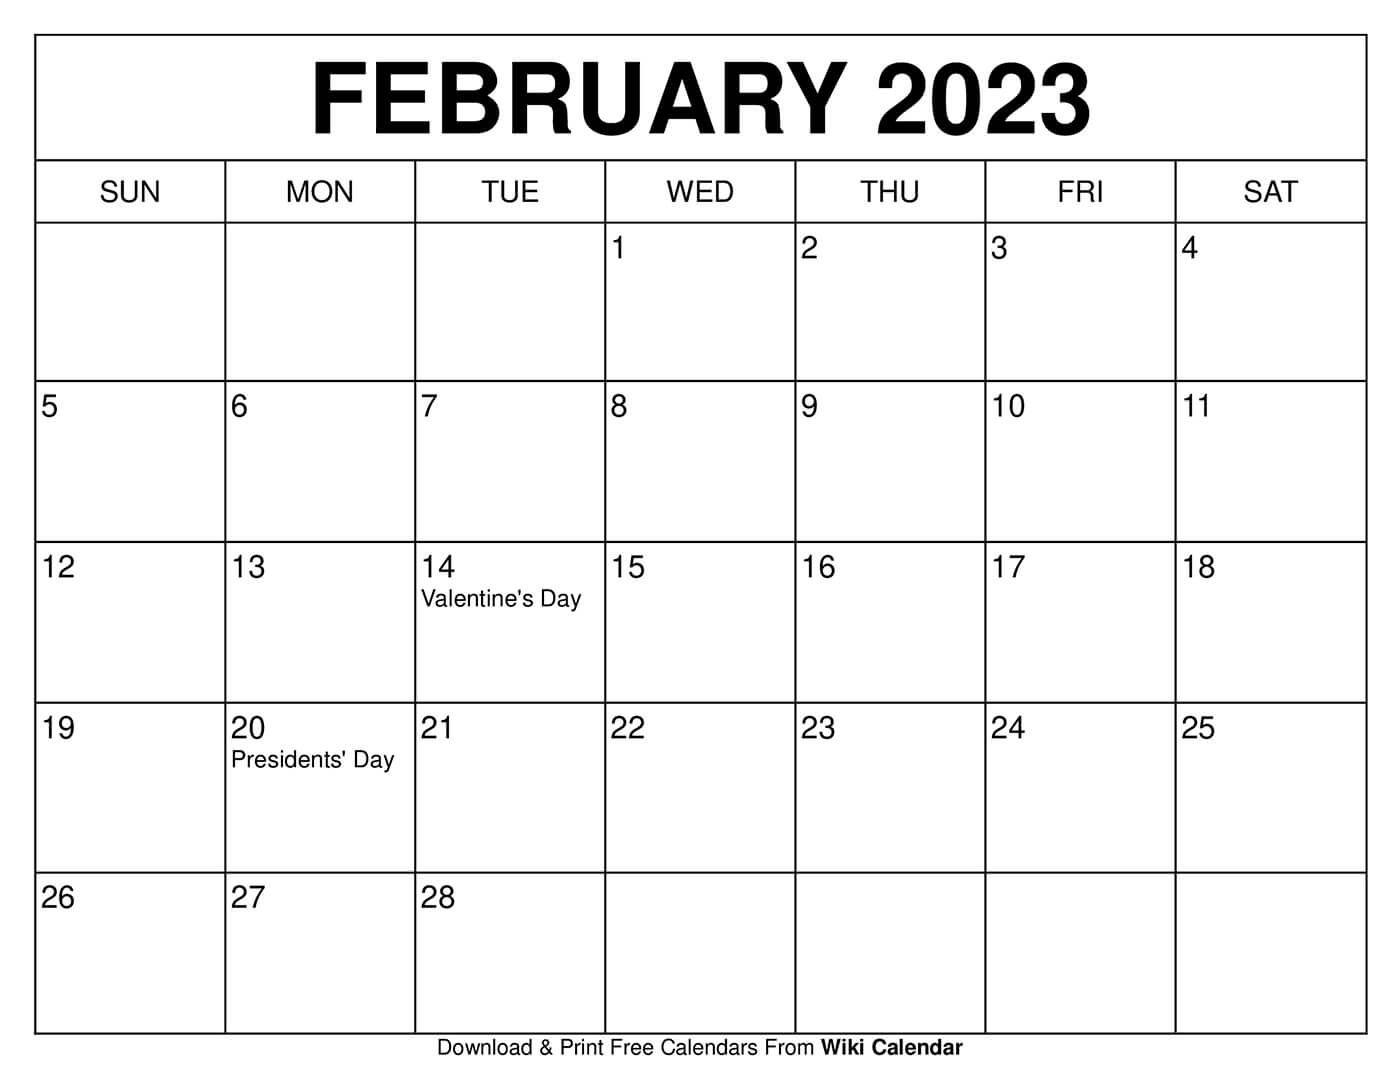 free-printable-february-2023-calendars-wiki-calendar